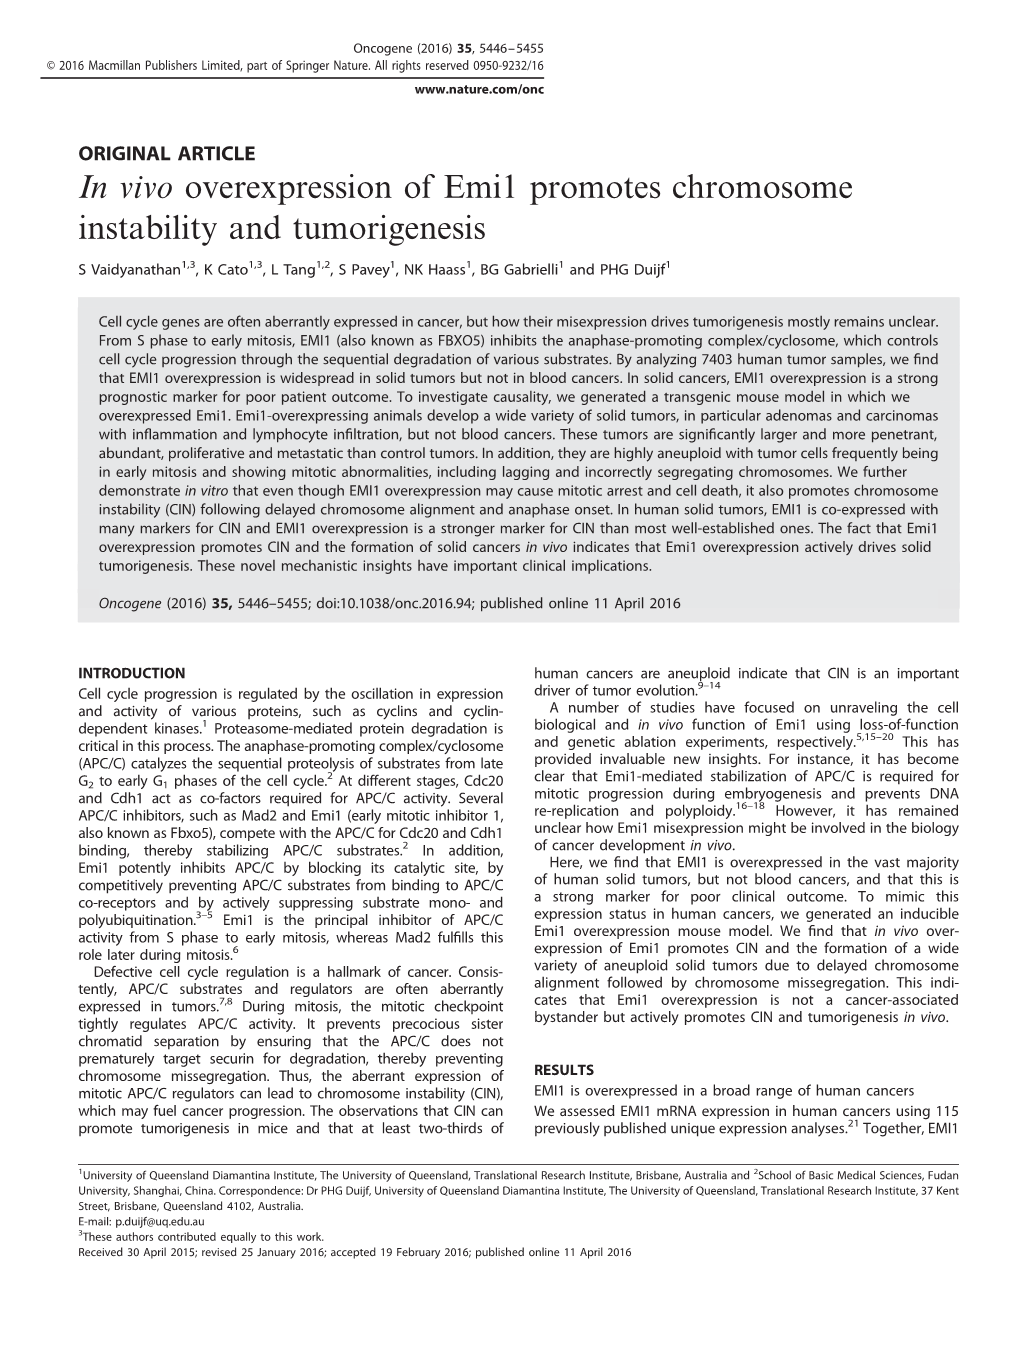 In Vivo Overexpression of Emi1 Promotes Chromosome Instability and Tumorigenesis